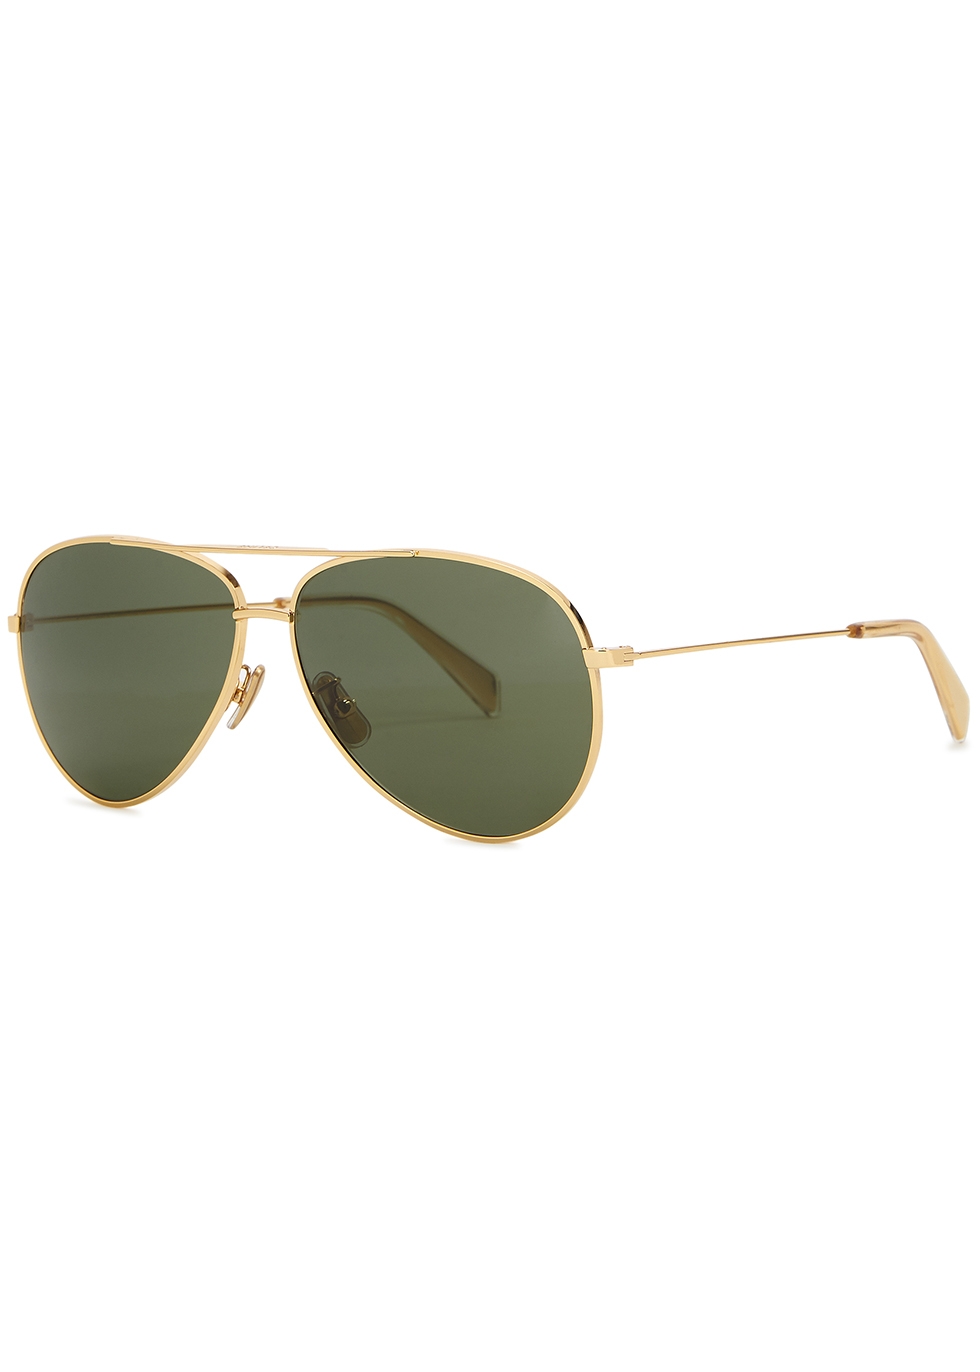 Celine Gold-tone aviator-style sunglasses - Harvey Nichols